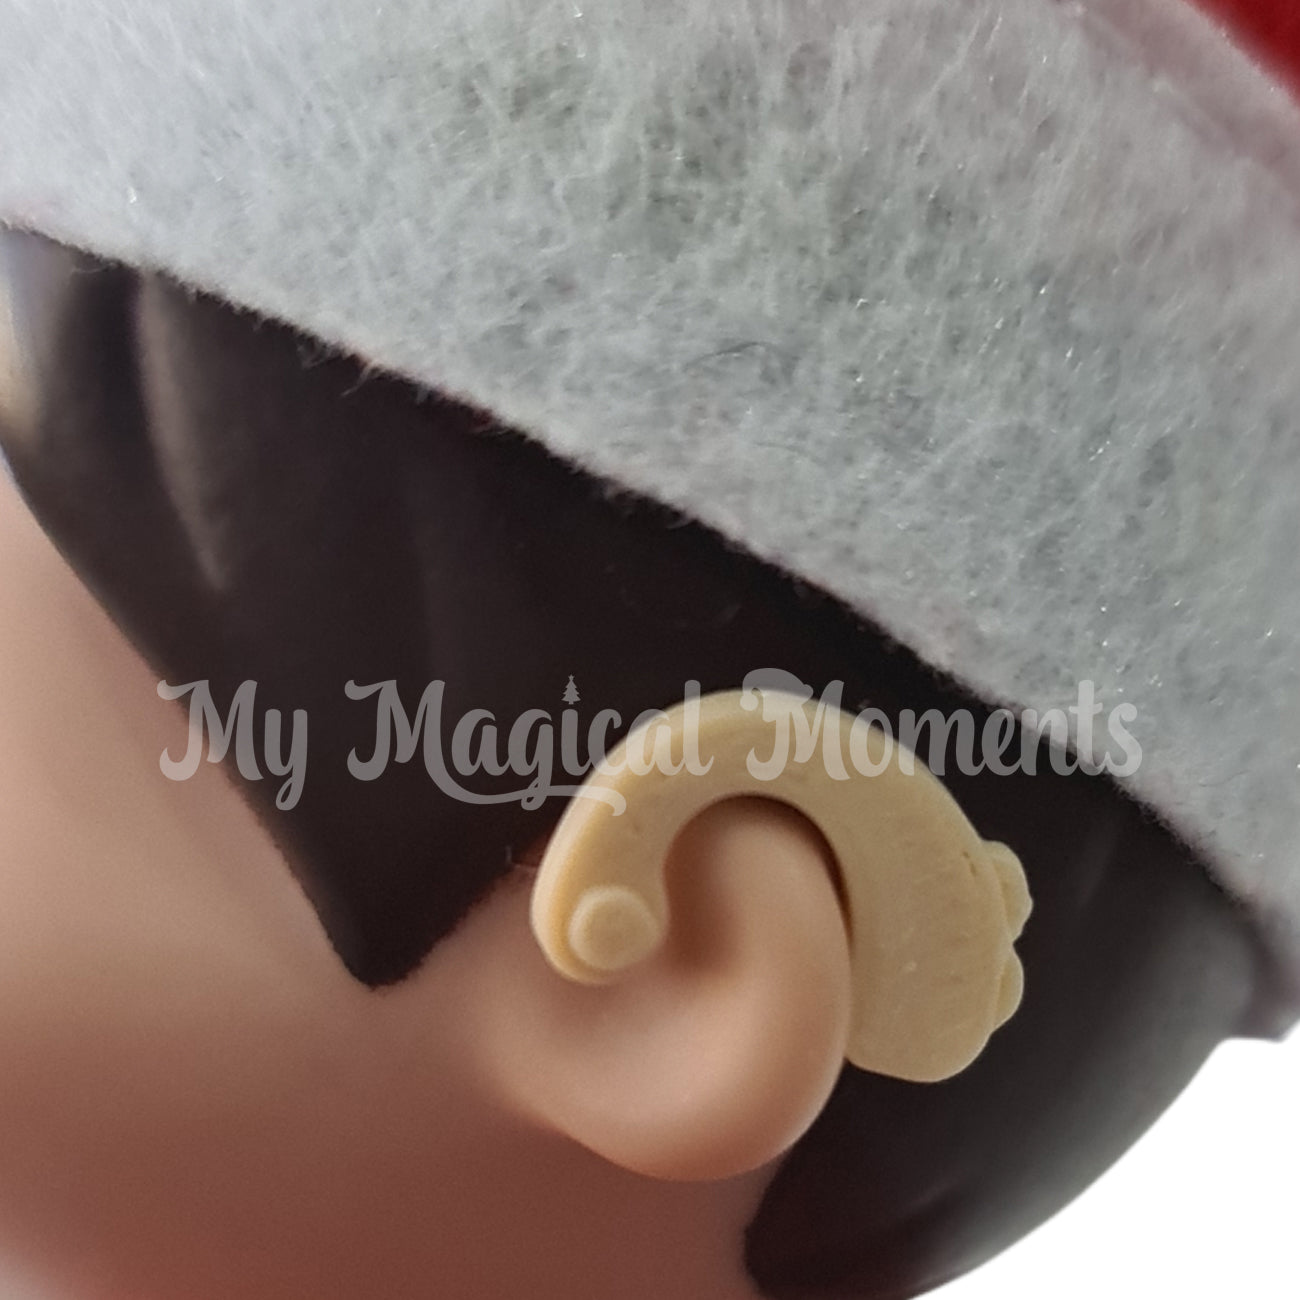 Elf on the shelf wearing a hearing aid